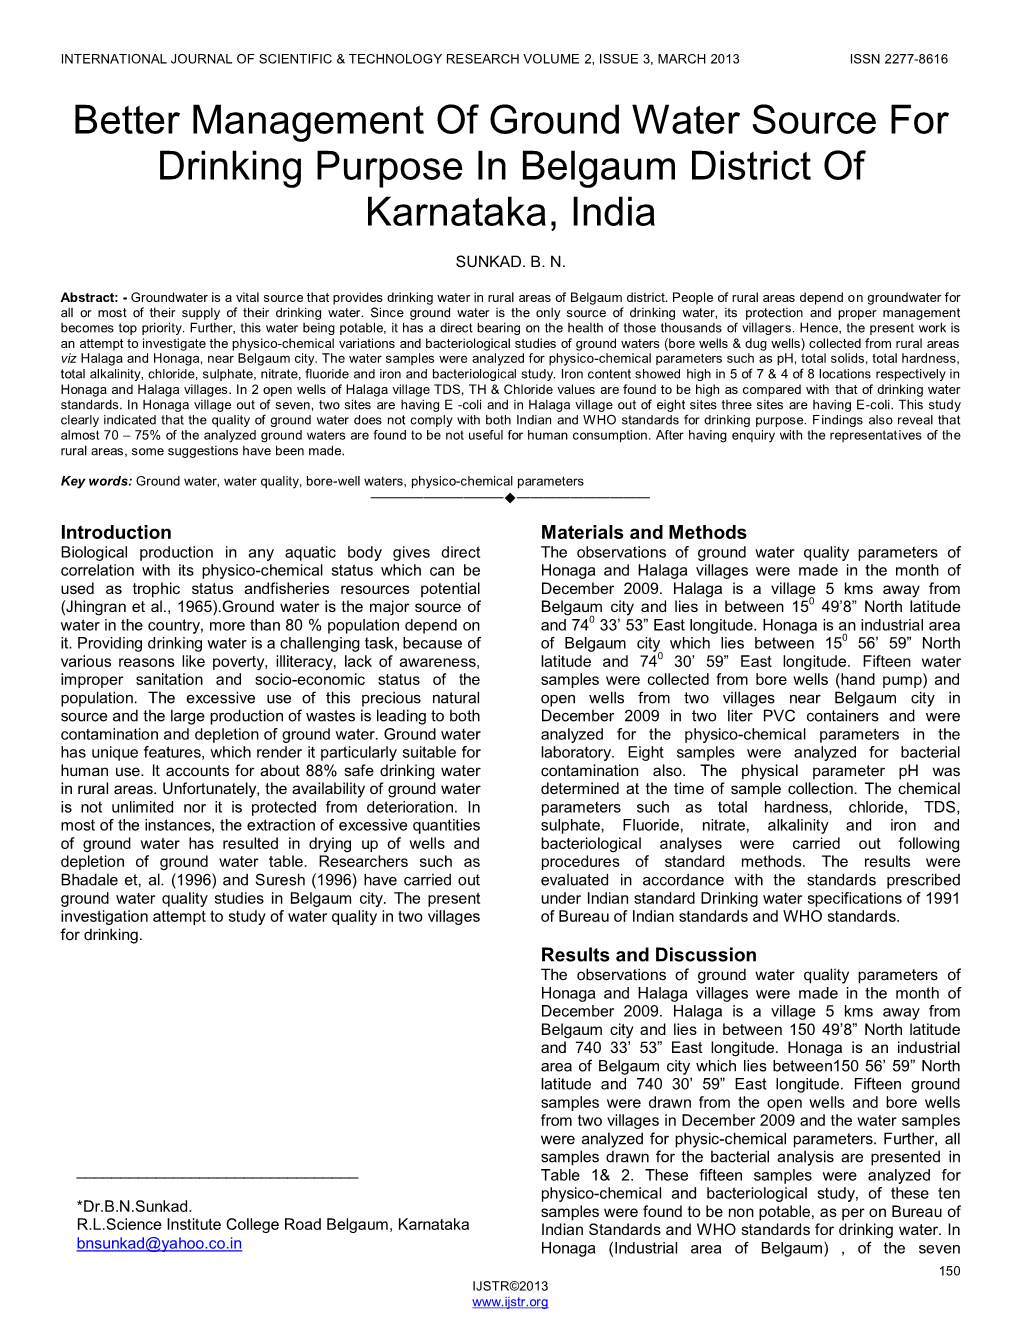 Better Management of Ground Water Source for Drinking Purpose in Belgaum District of Karnataka, India